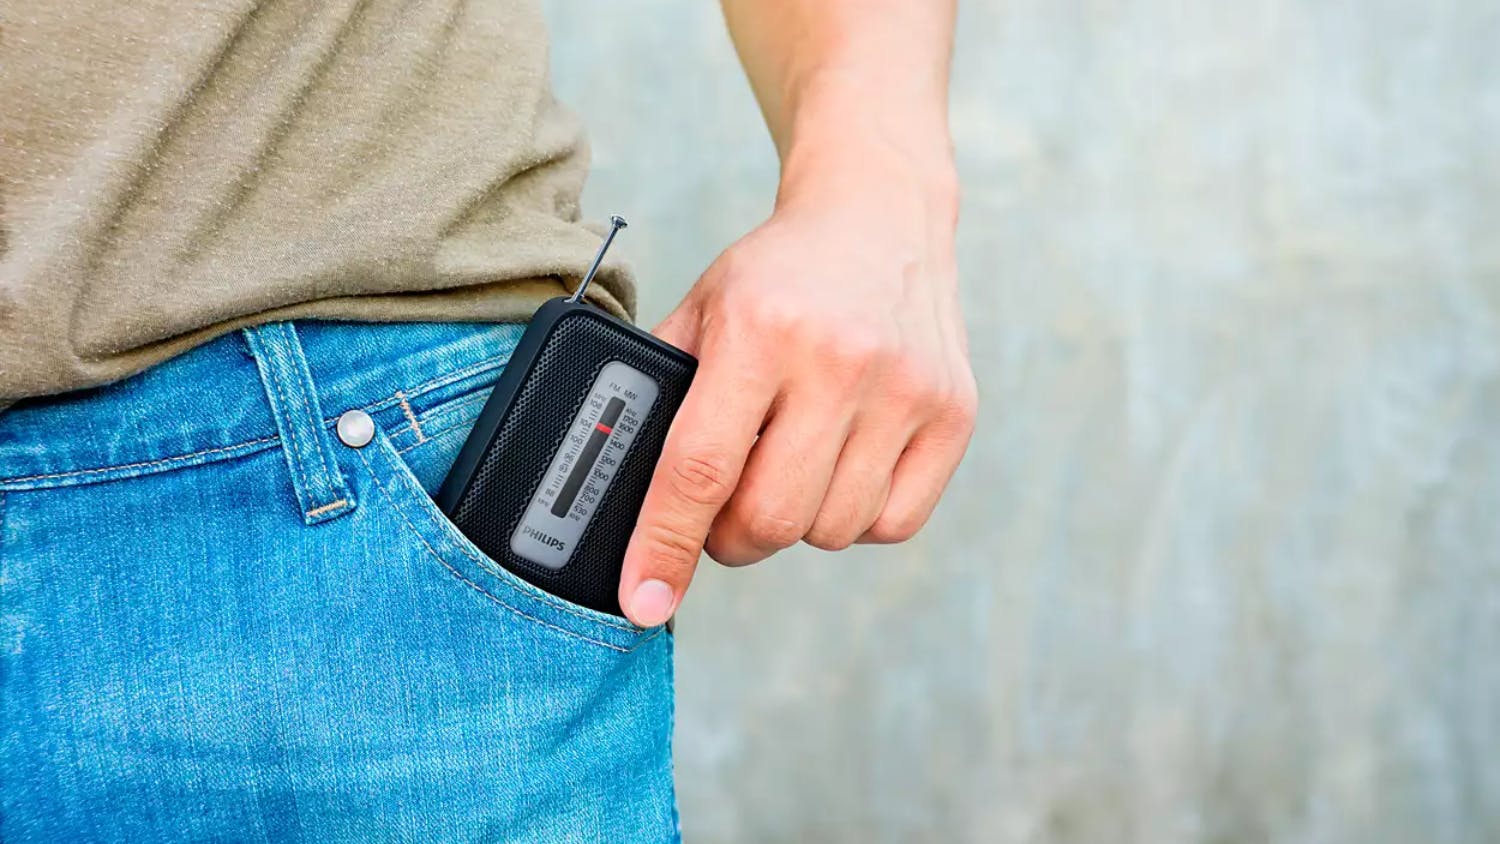 Philips Pocket Sized TAR1506/00 MW/FM Portable Radio - Black